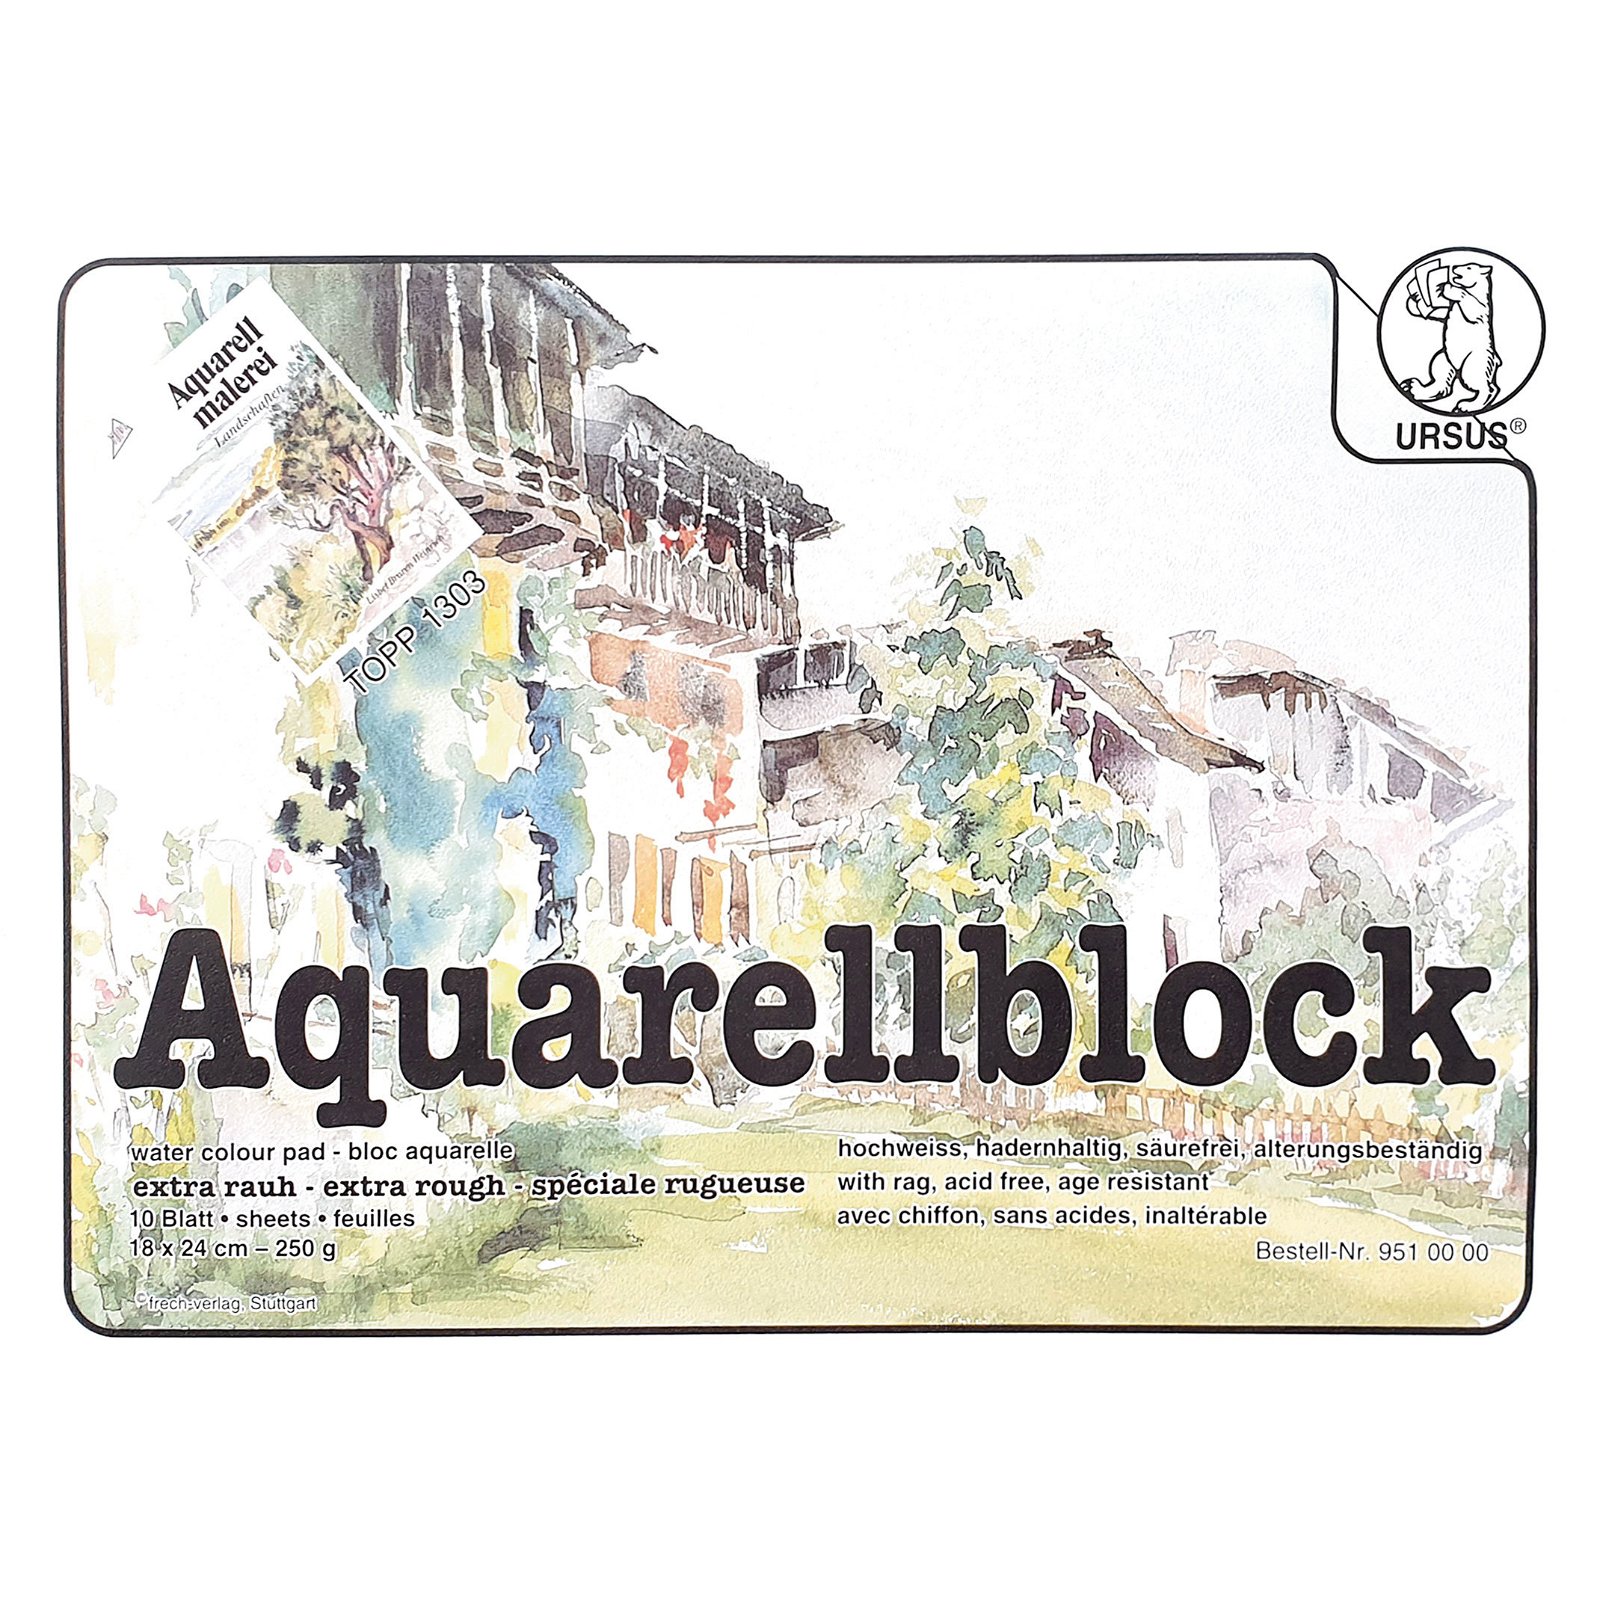 Aquarellblock 250g 18x24cm